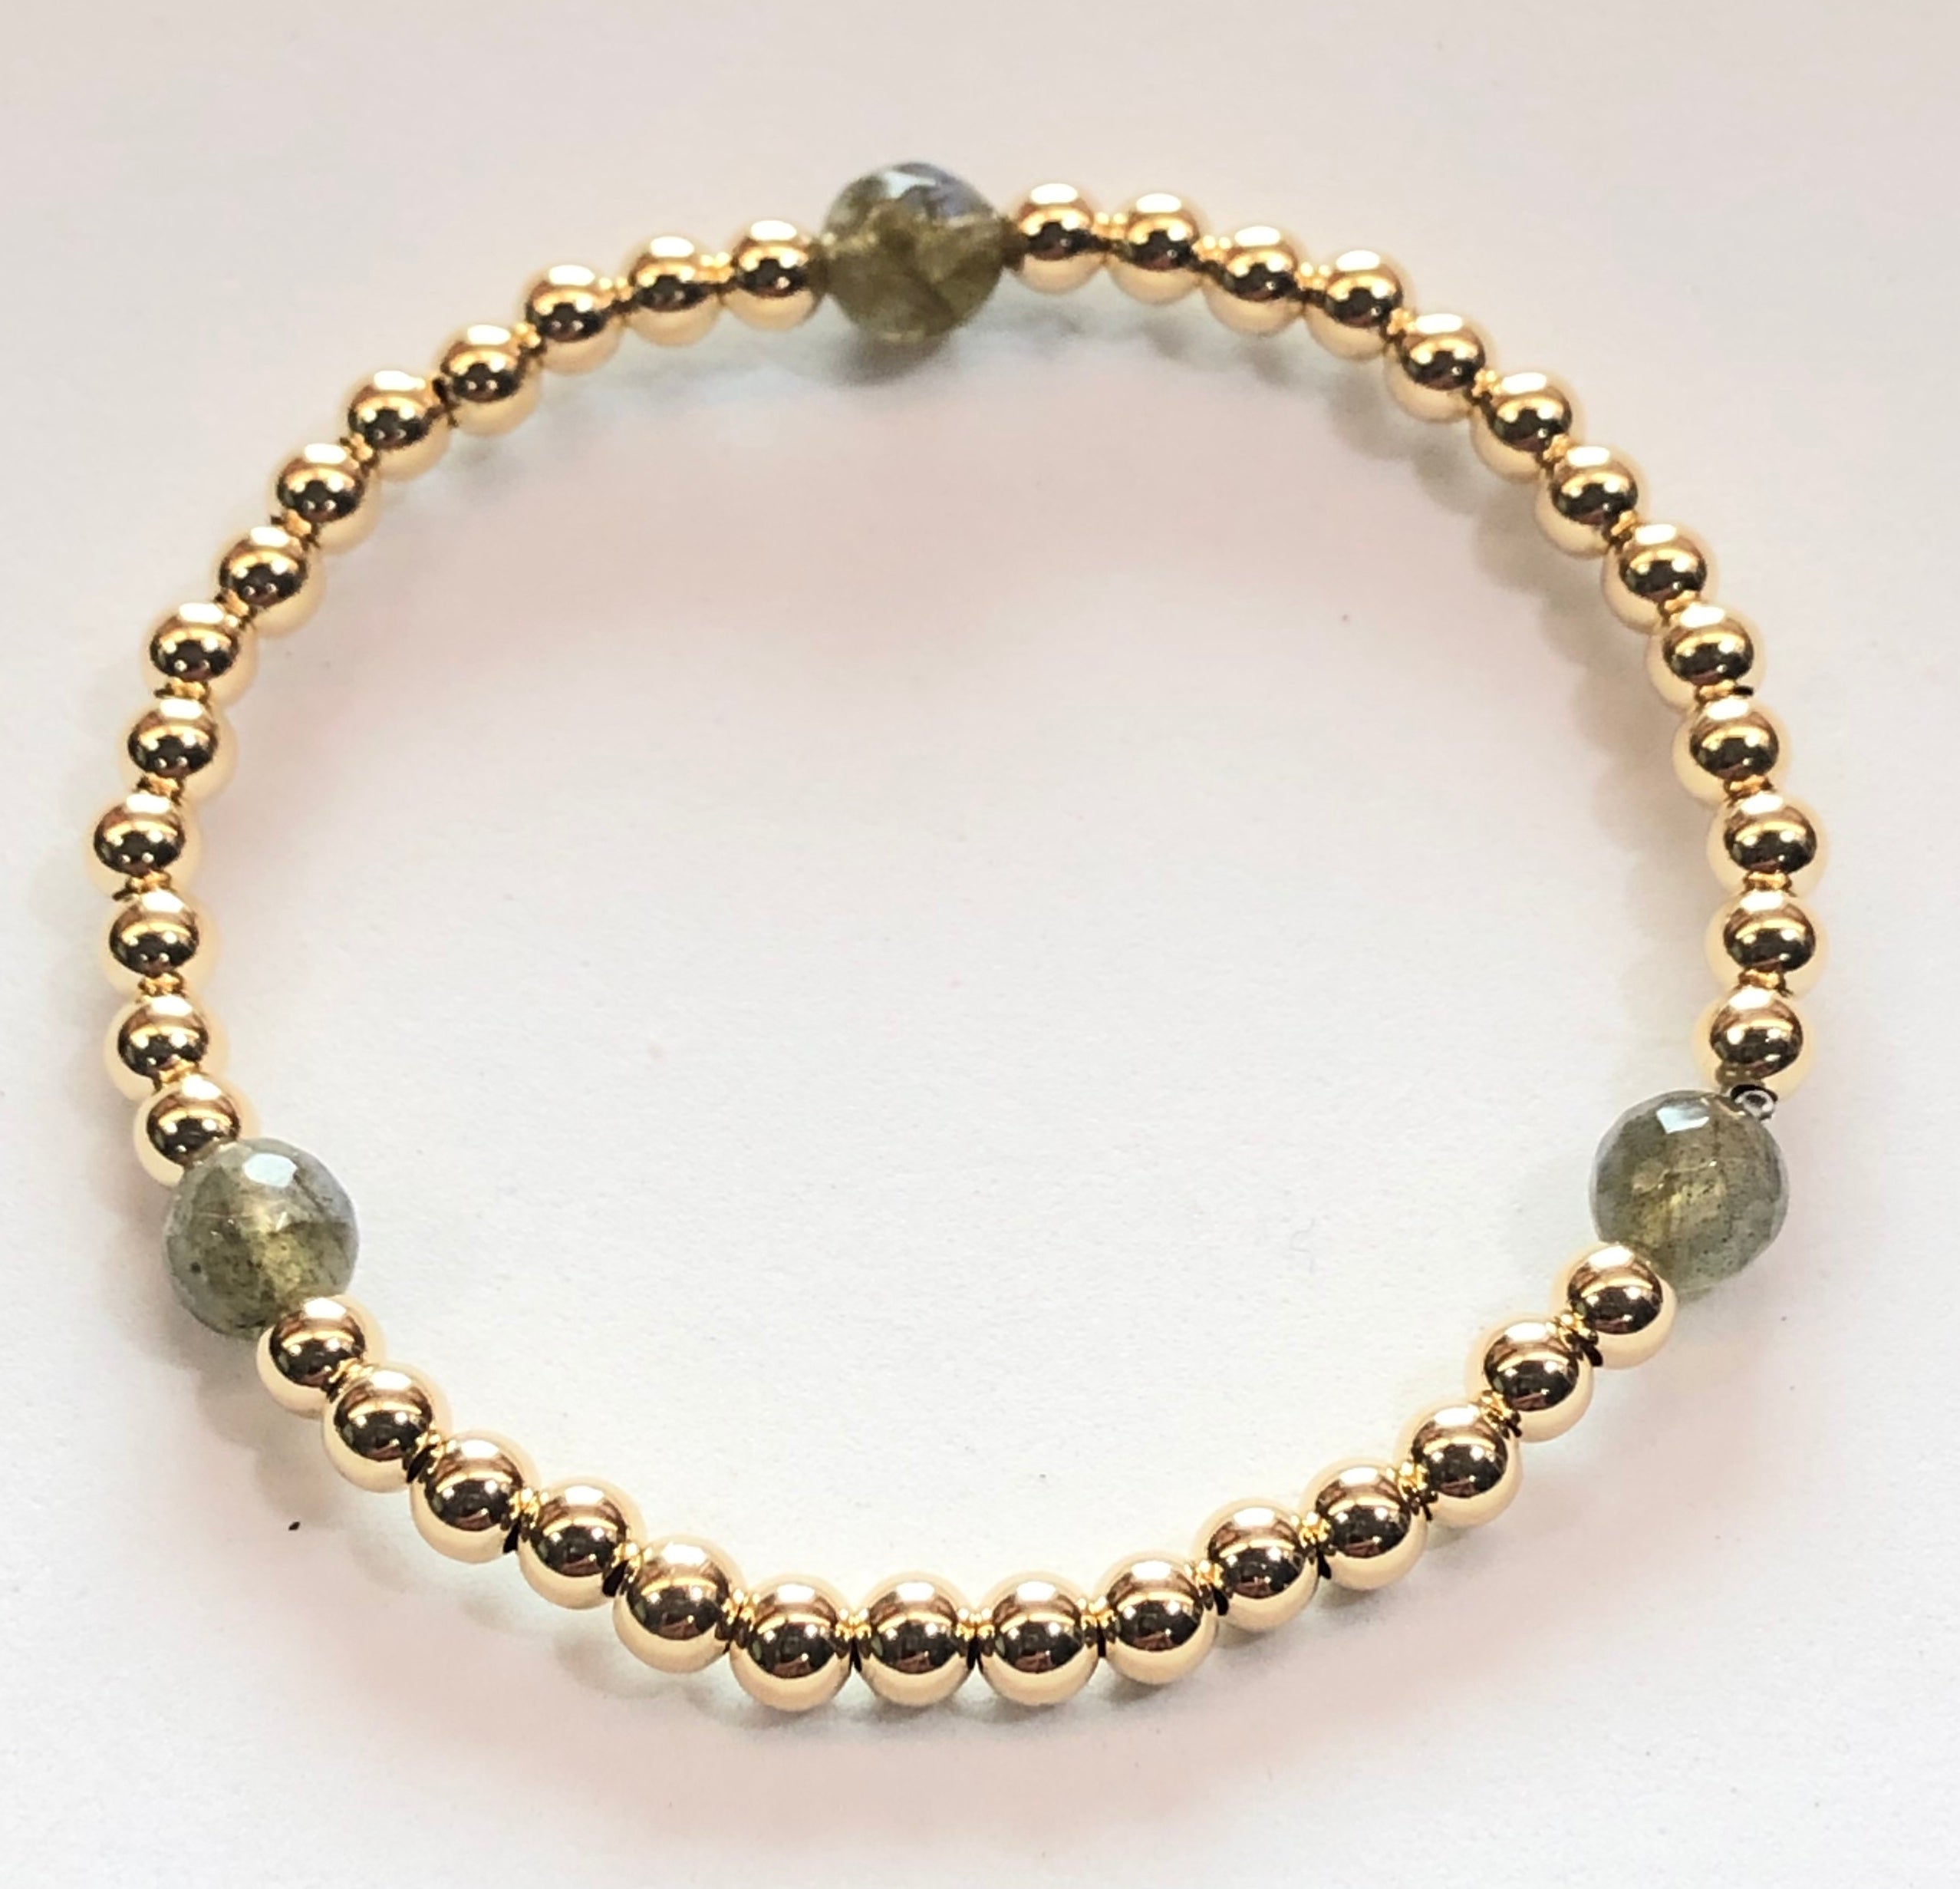 4mm 14kt Gold Filled Bead Bracelet with 3 6mm Labradorite Beads